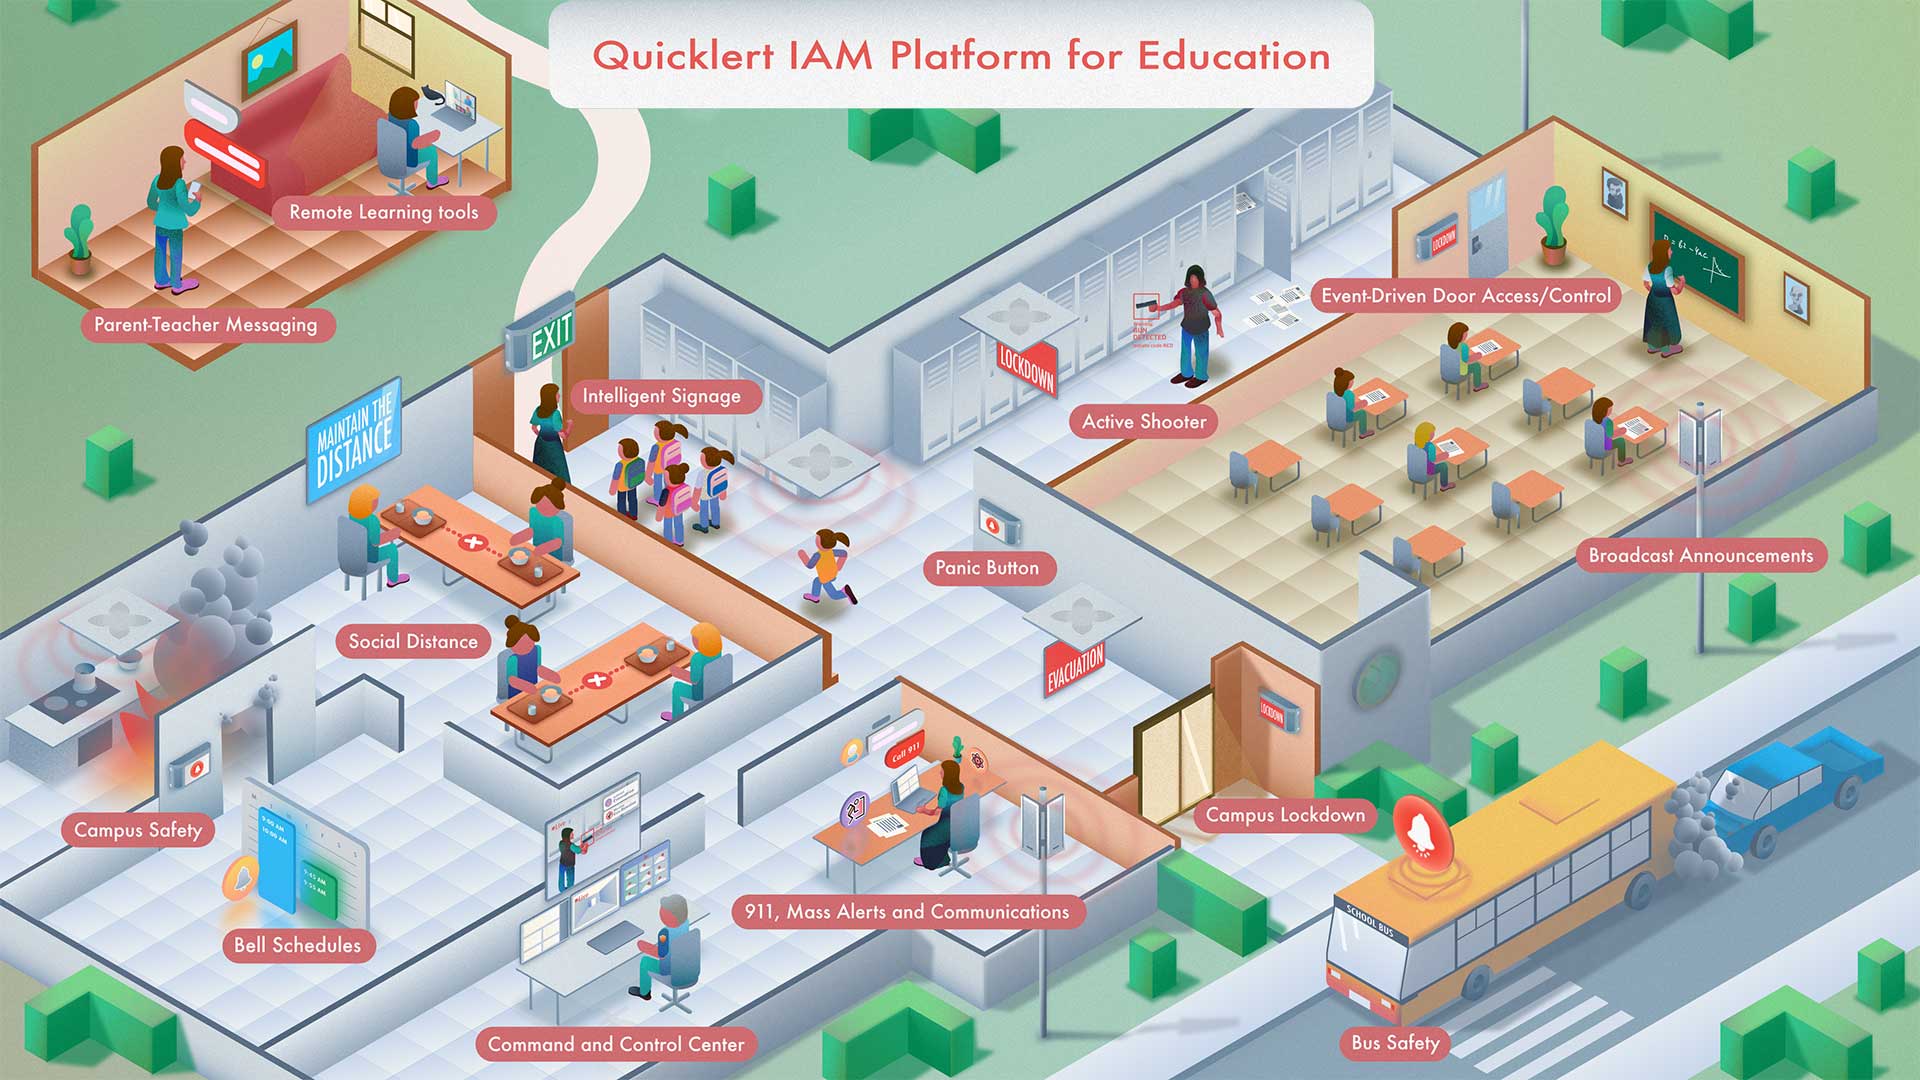 Quicklert IAM Platform for Education